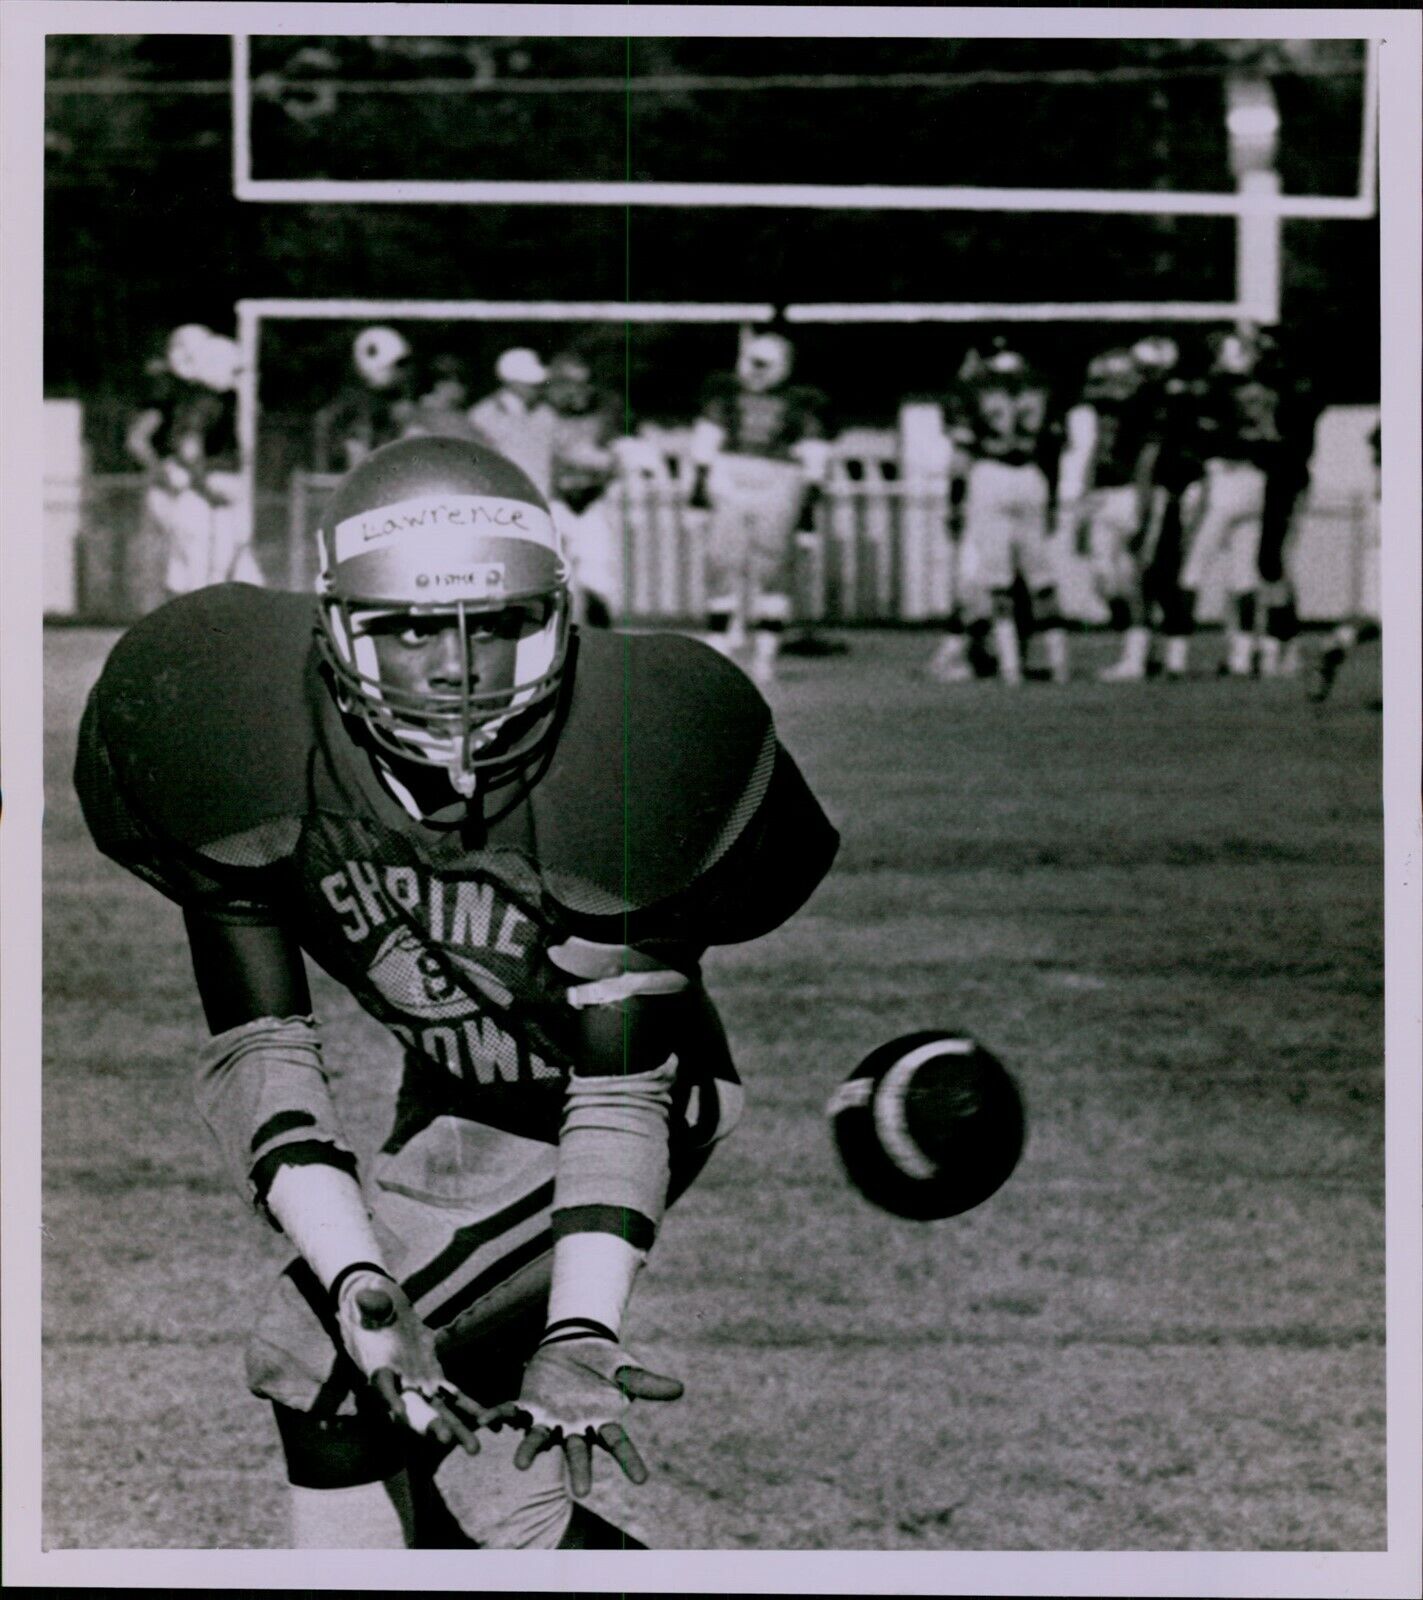 LG876 1988 Orig Diedra Laird Photo TYLER LAWRENCE Shrine Bowl Football Athlete